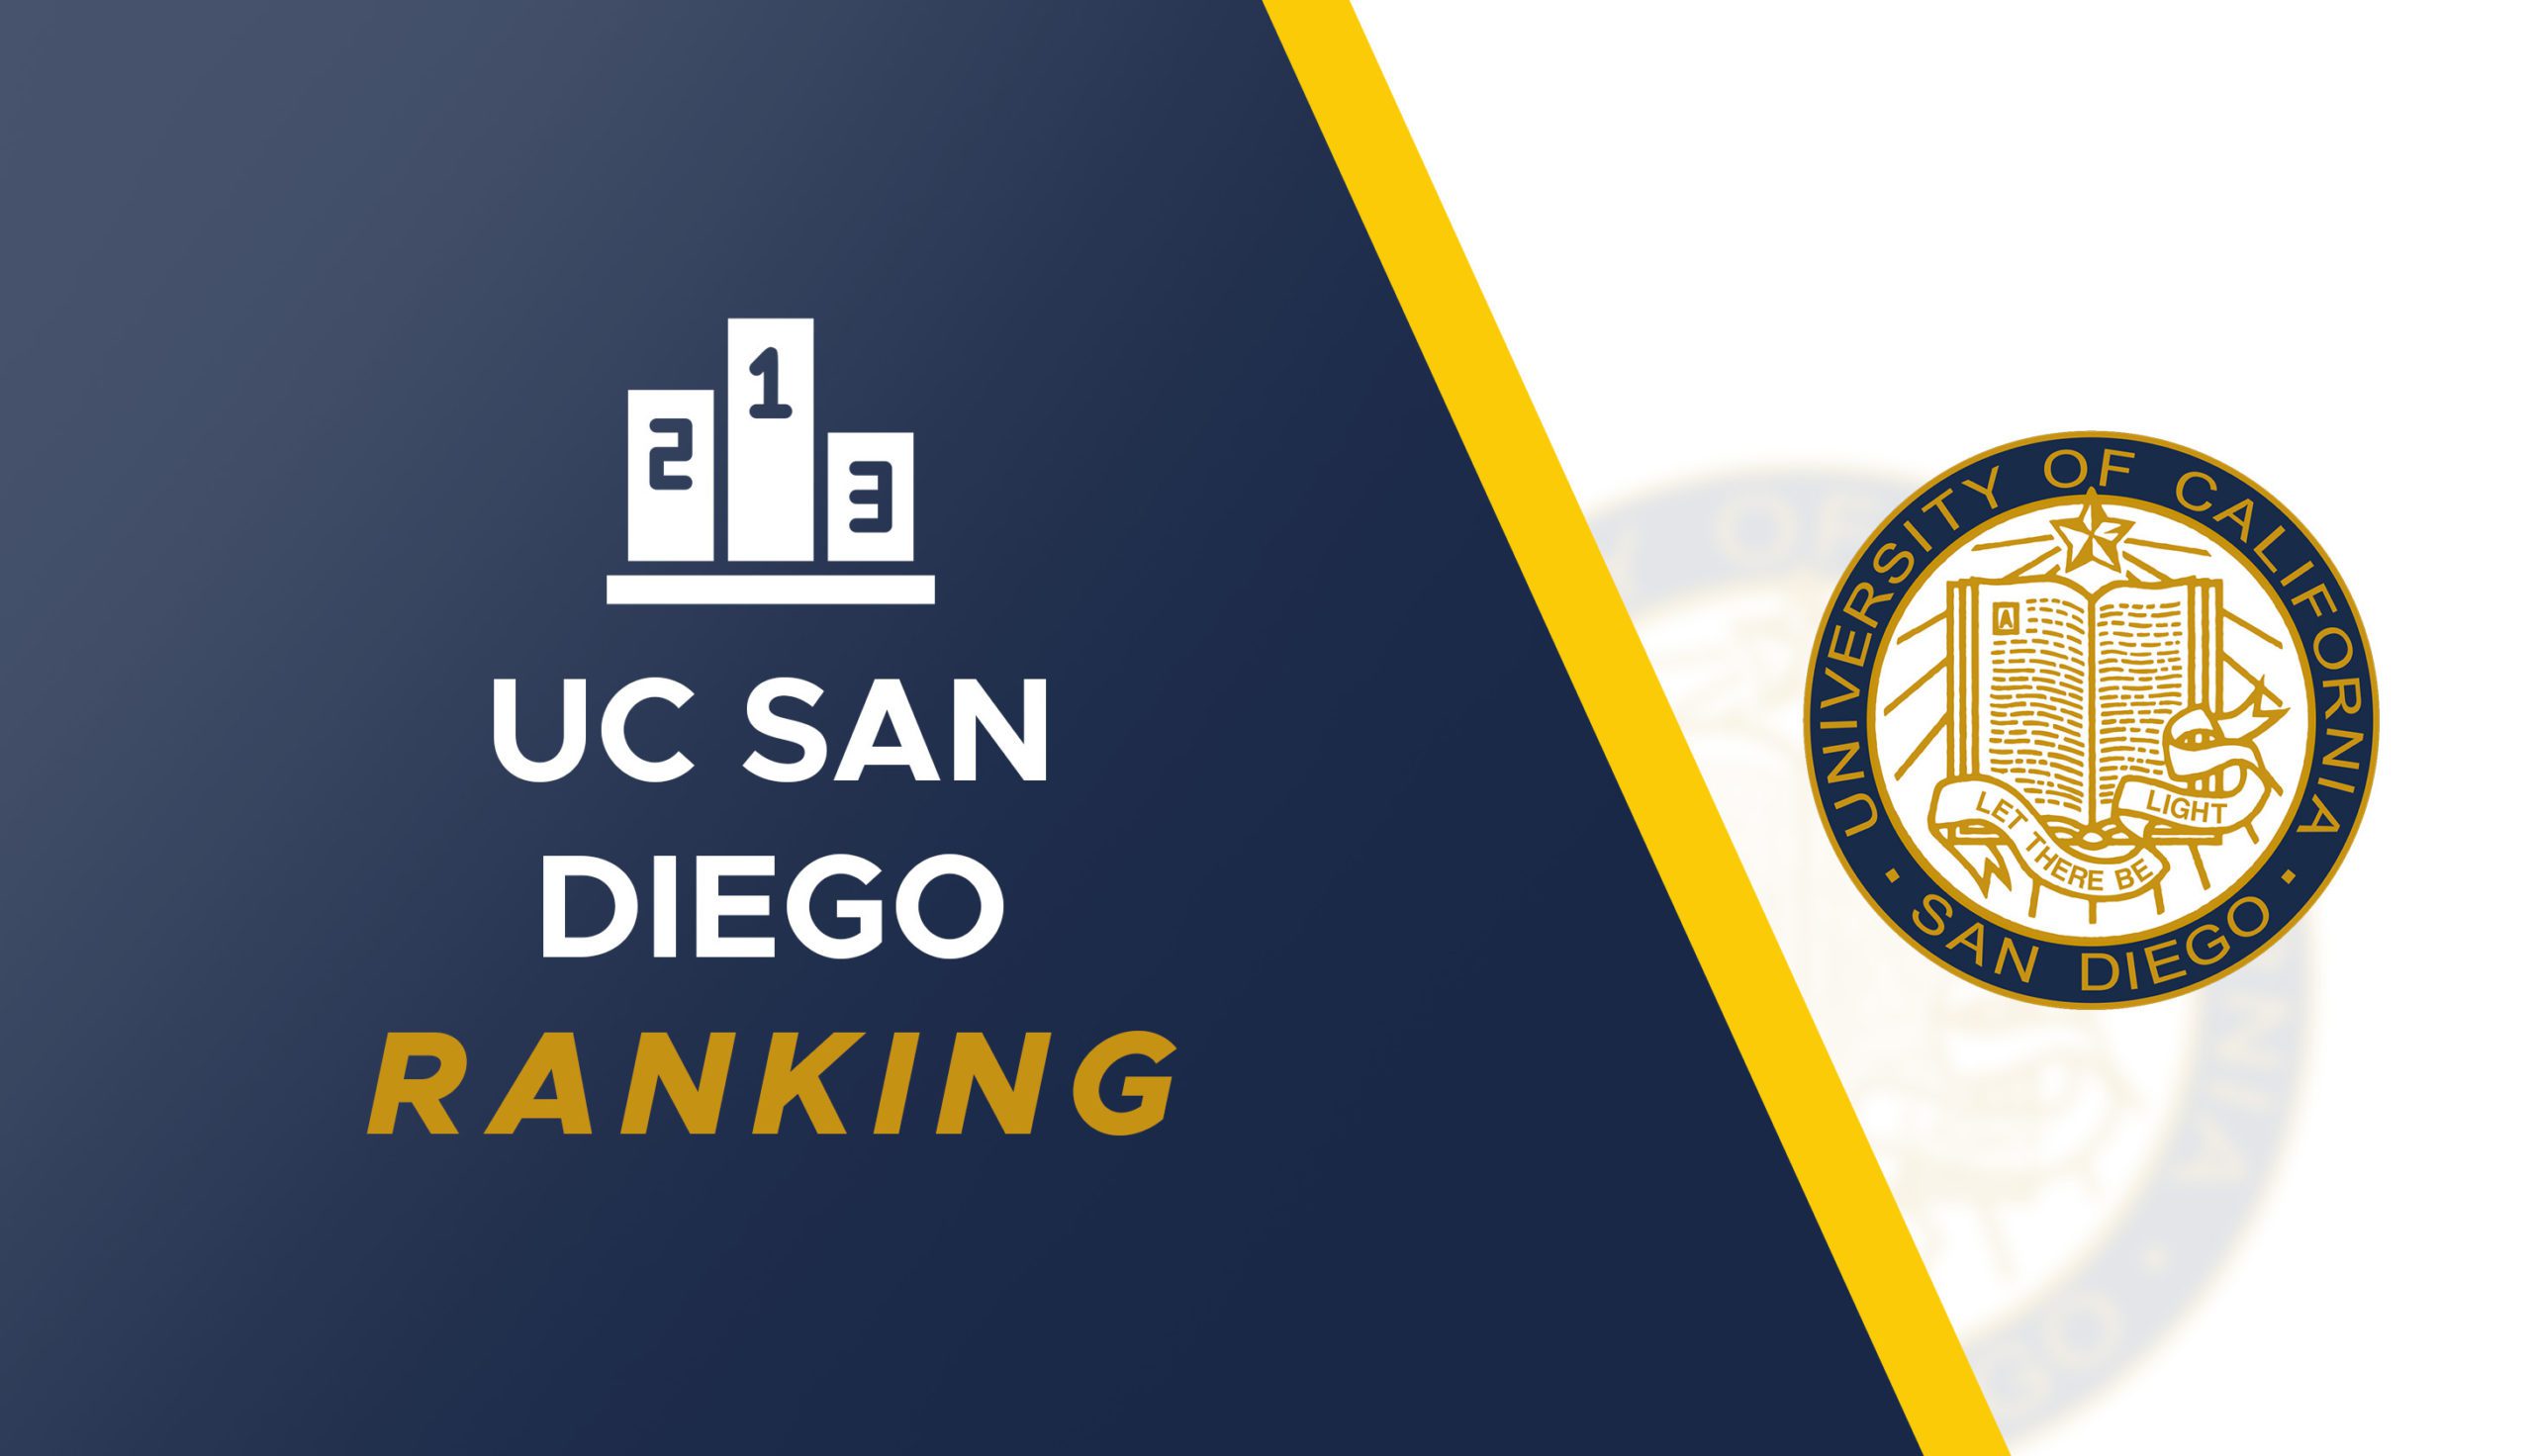 UCSD Ranking UC San Diego Ranking UCSD Rankings